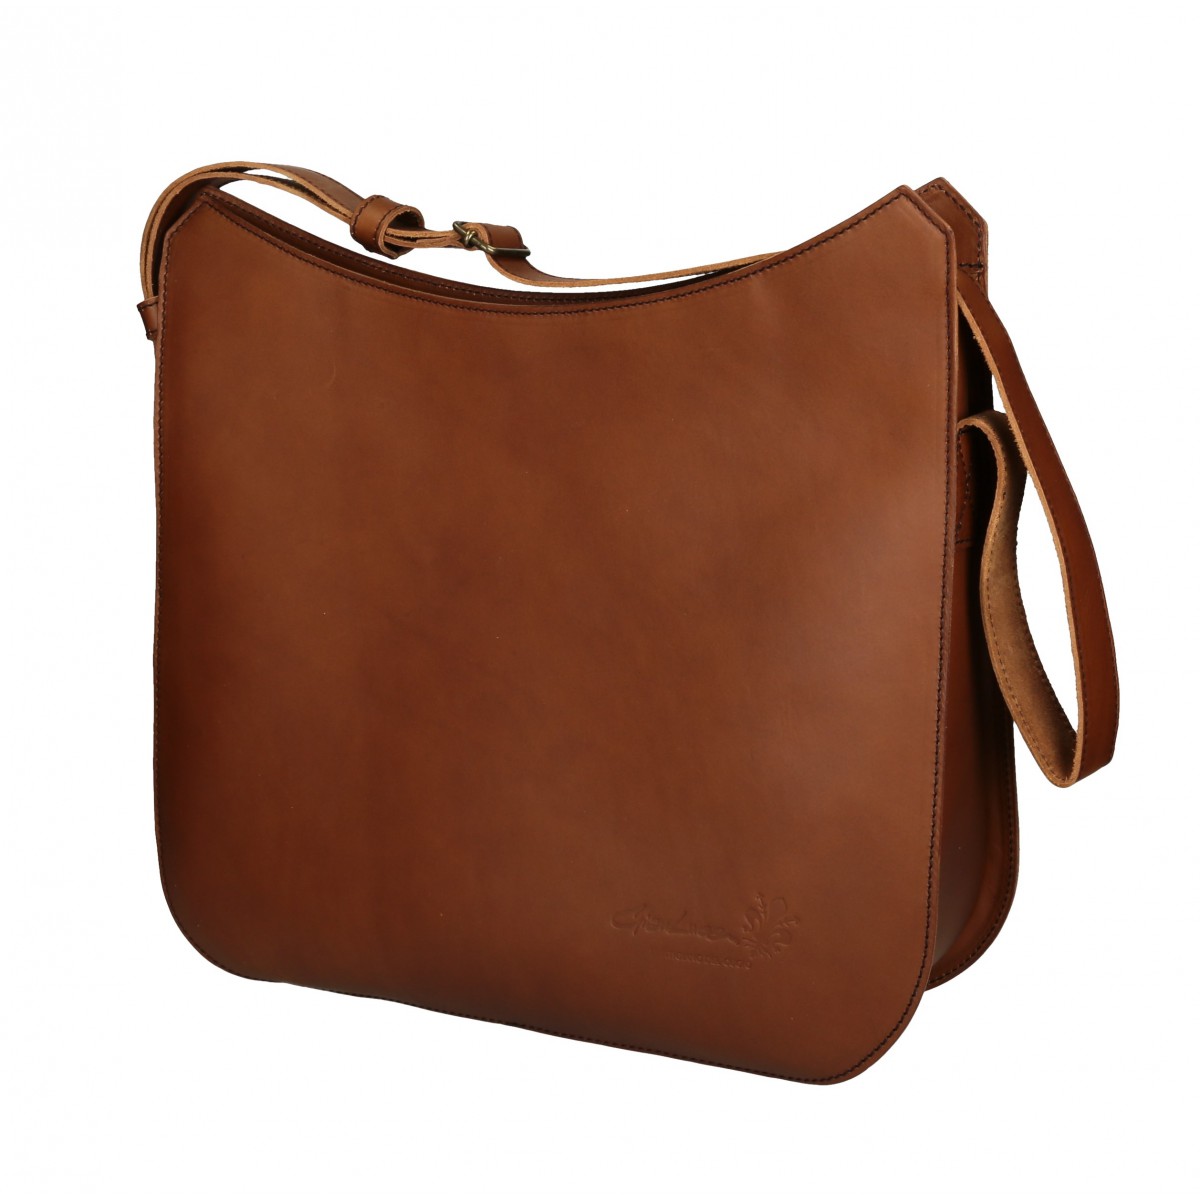 Handmade vintage leather shoulder bags long strap | Gianluca - The leather craftsman